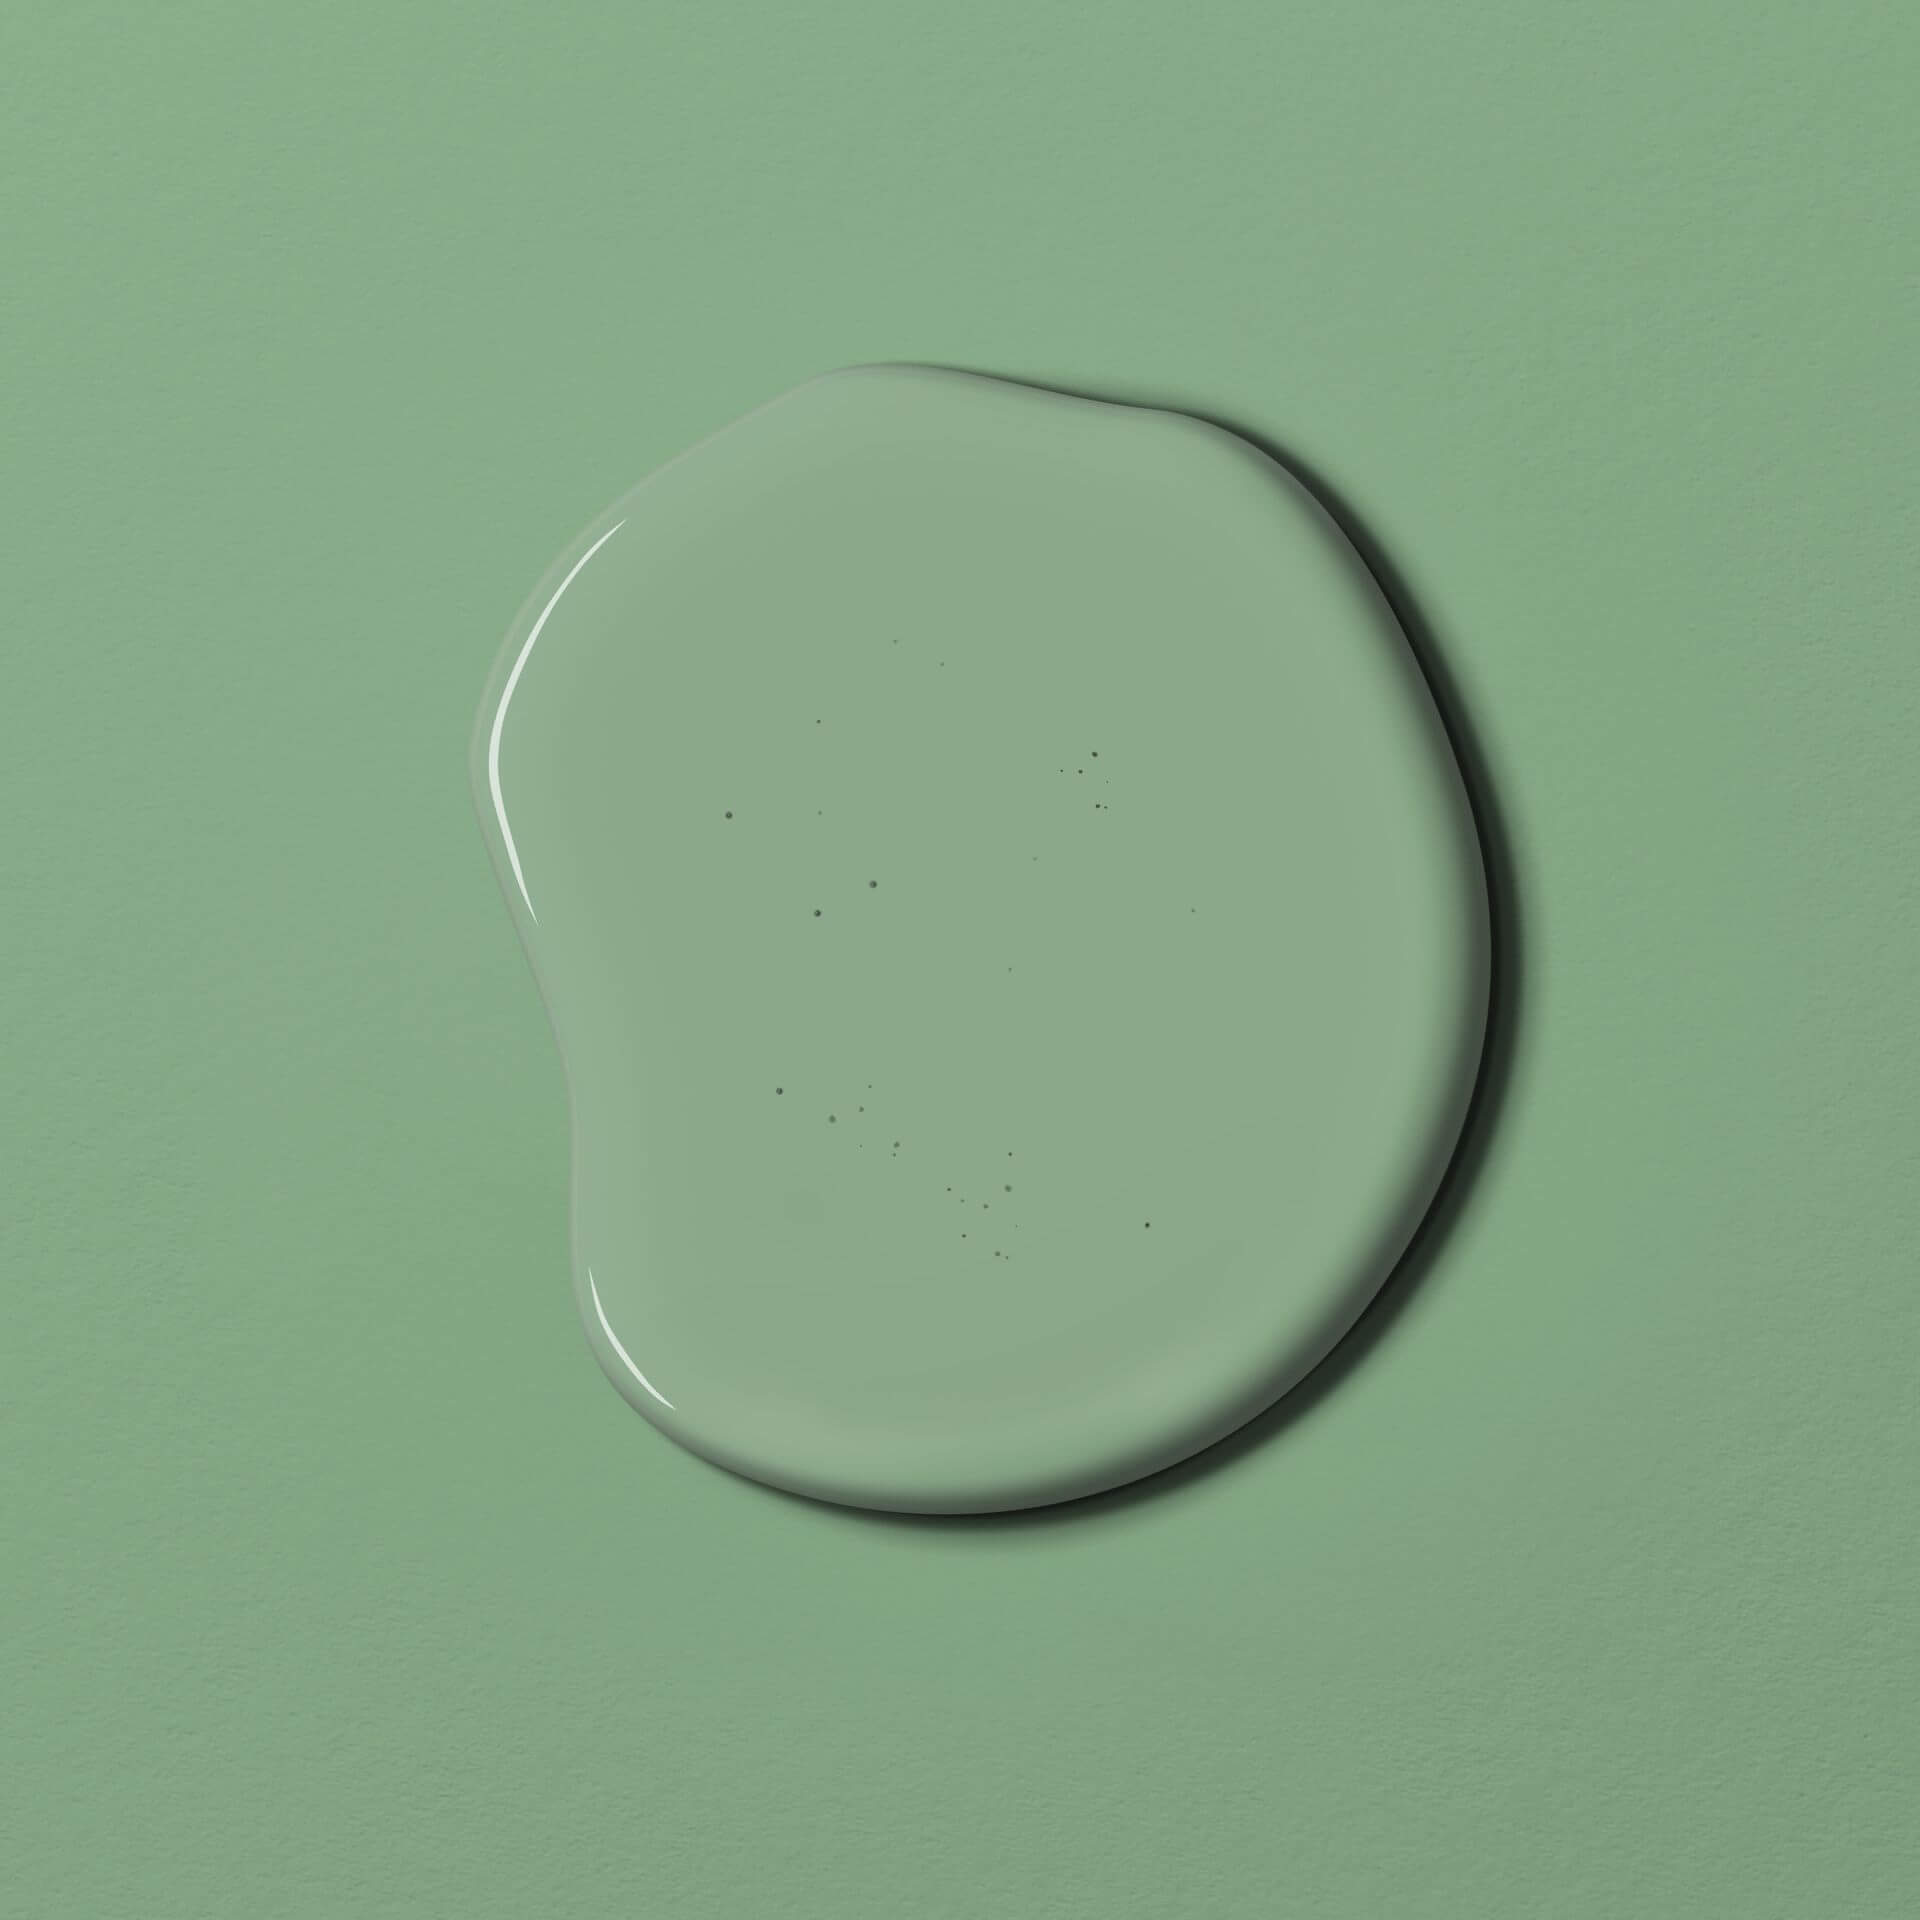 MissPompadour Green with Glass - Eggshell Varnish 1L